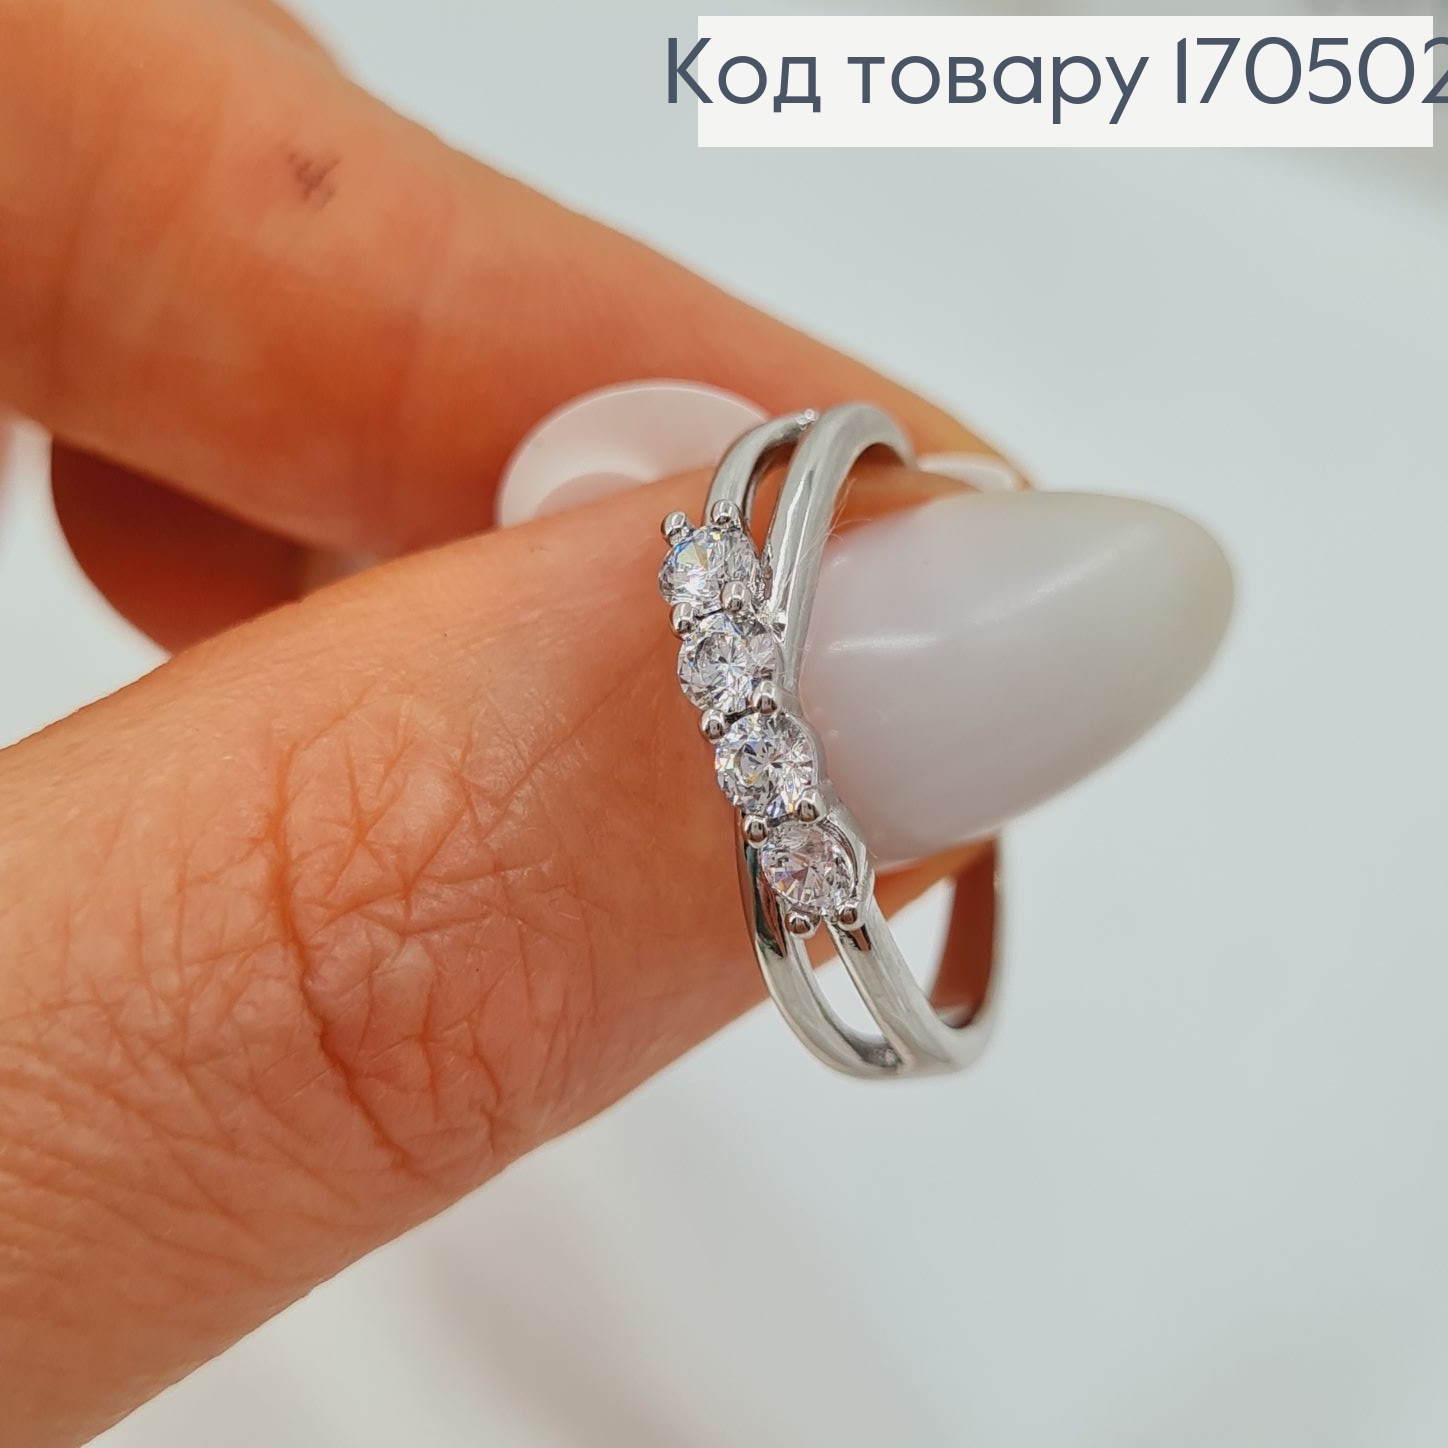 Кольцо родированое с 4 камнями Xuping  170502 фото 2